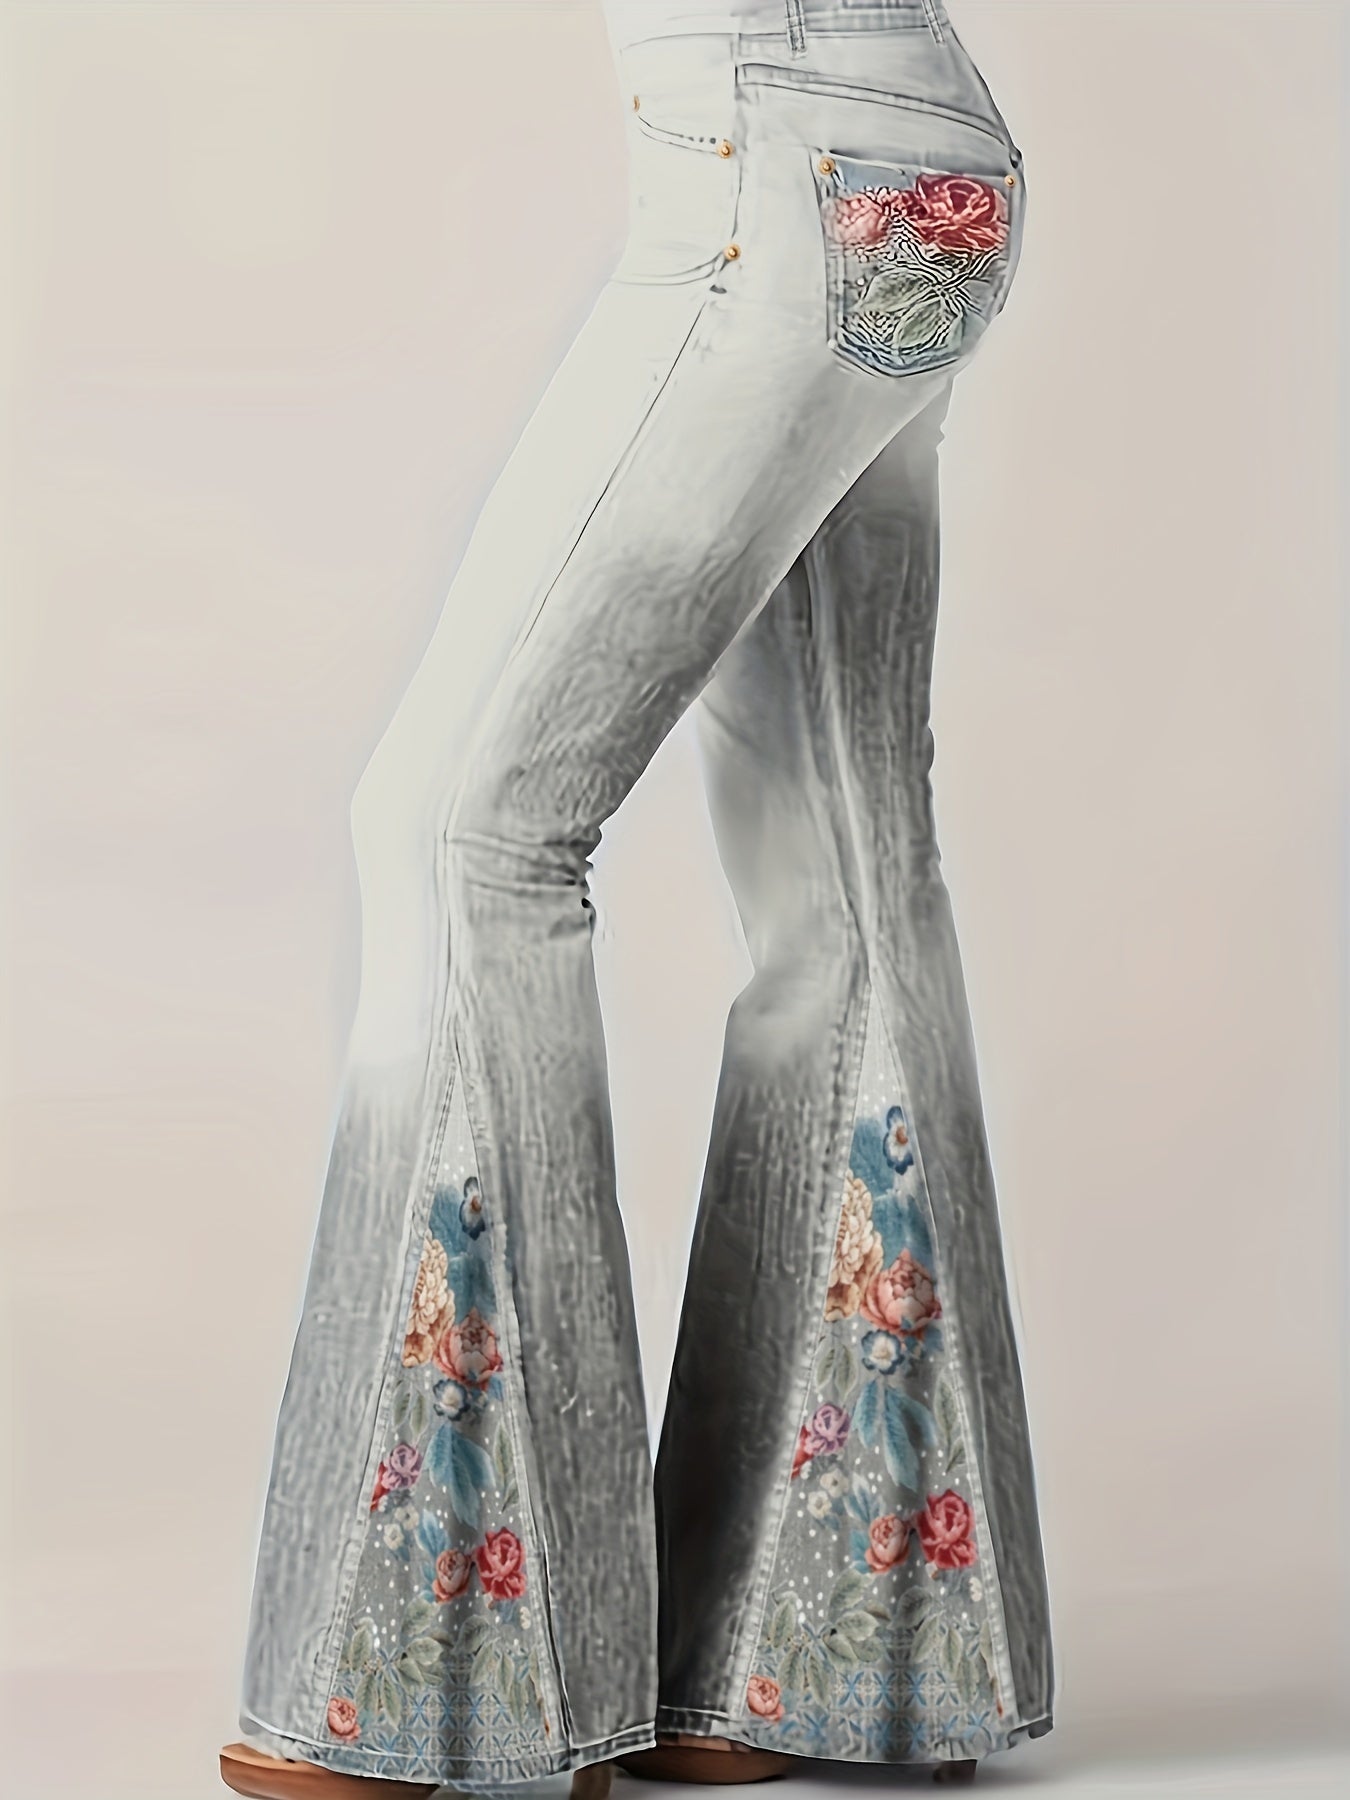 vlovelaw Plus Size Casual Trousers, Women's Plus Denim Print Slight Stretch Contrast Floral Panel Flare Pants